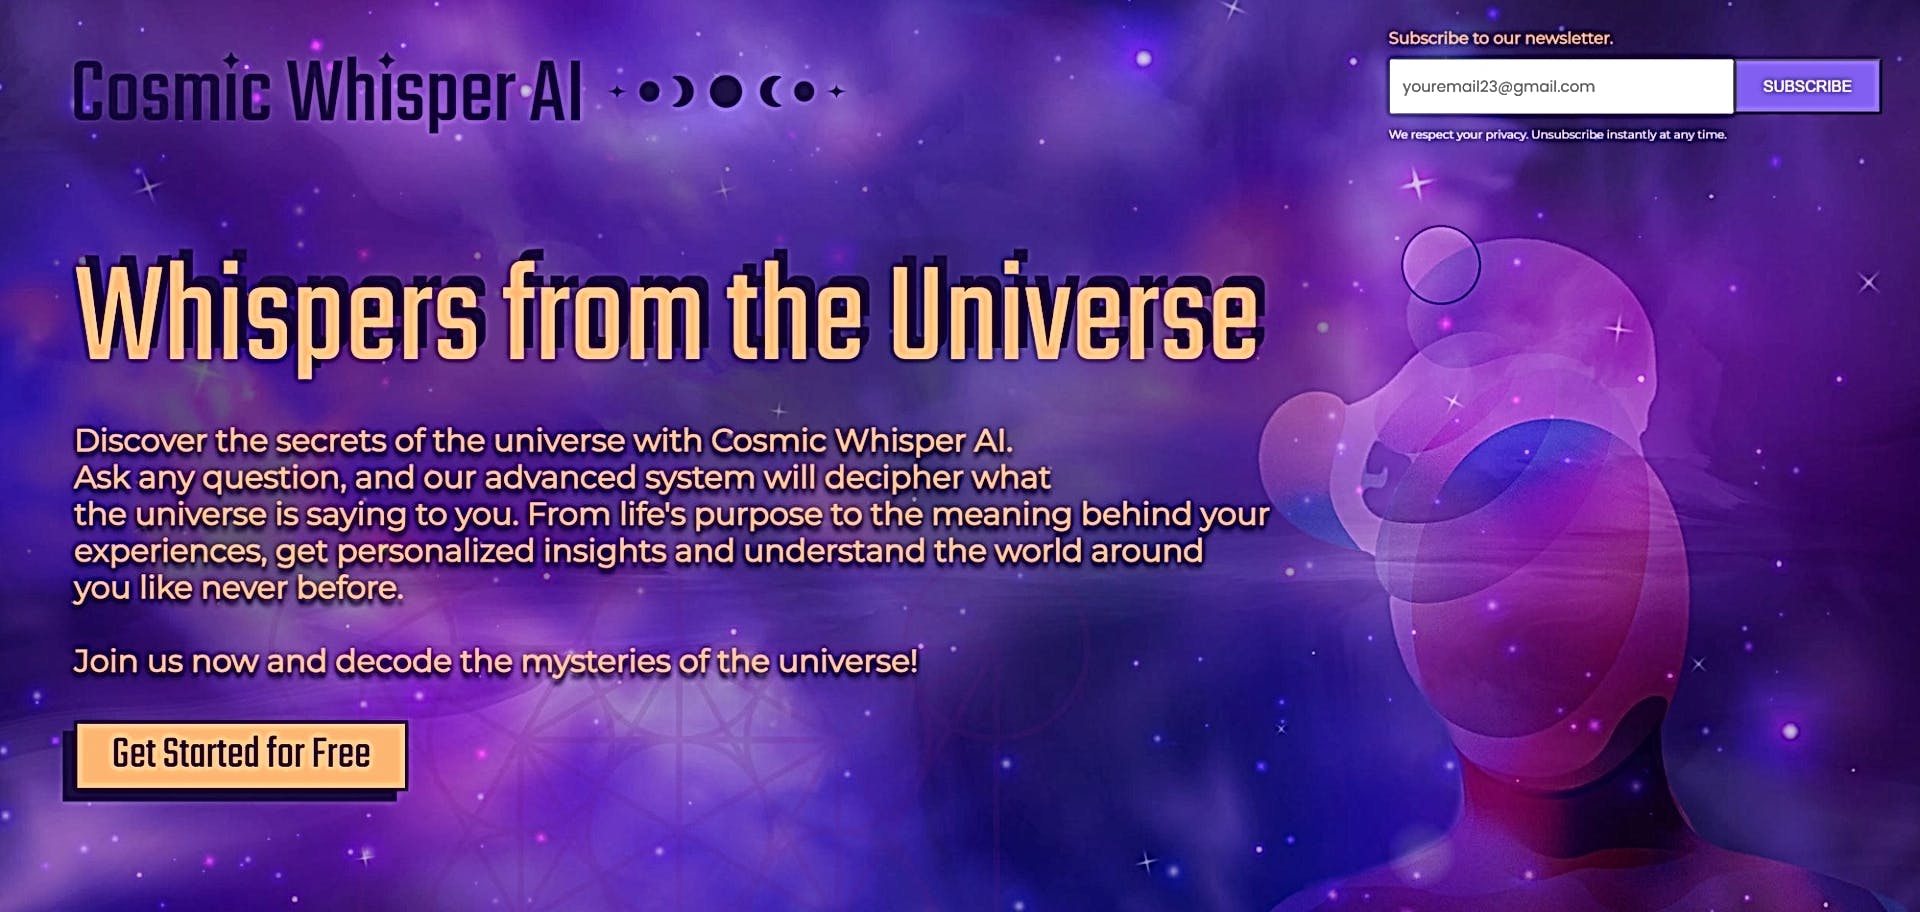 Cosmic Whisper AI featured